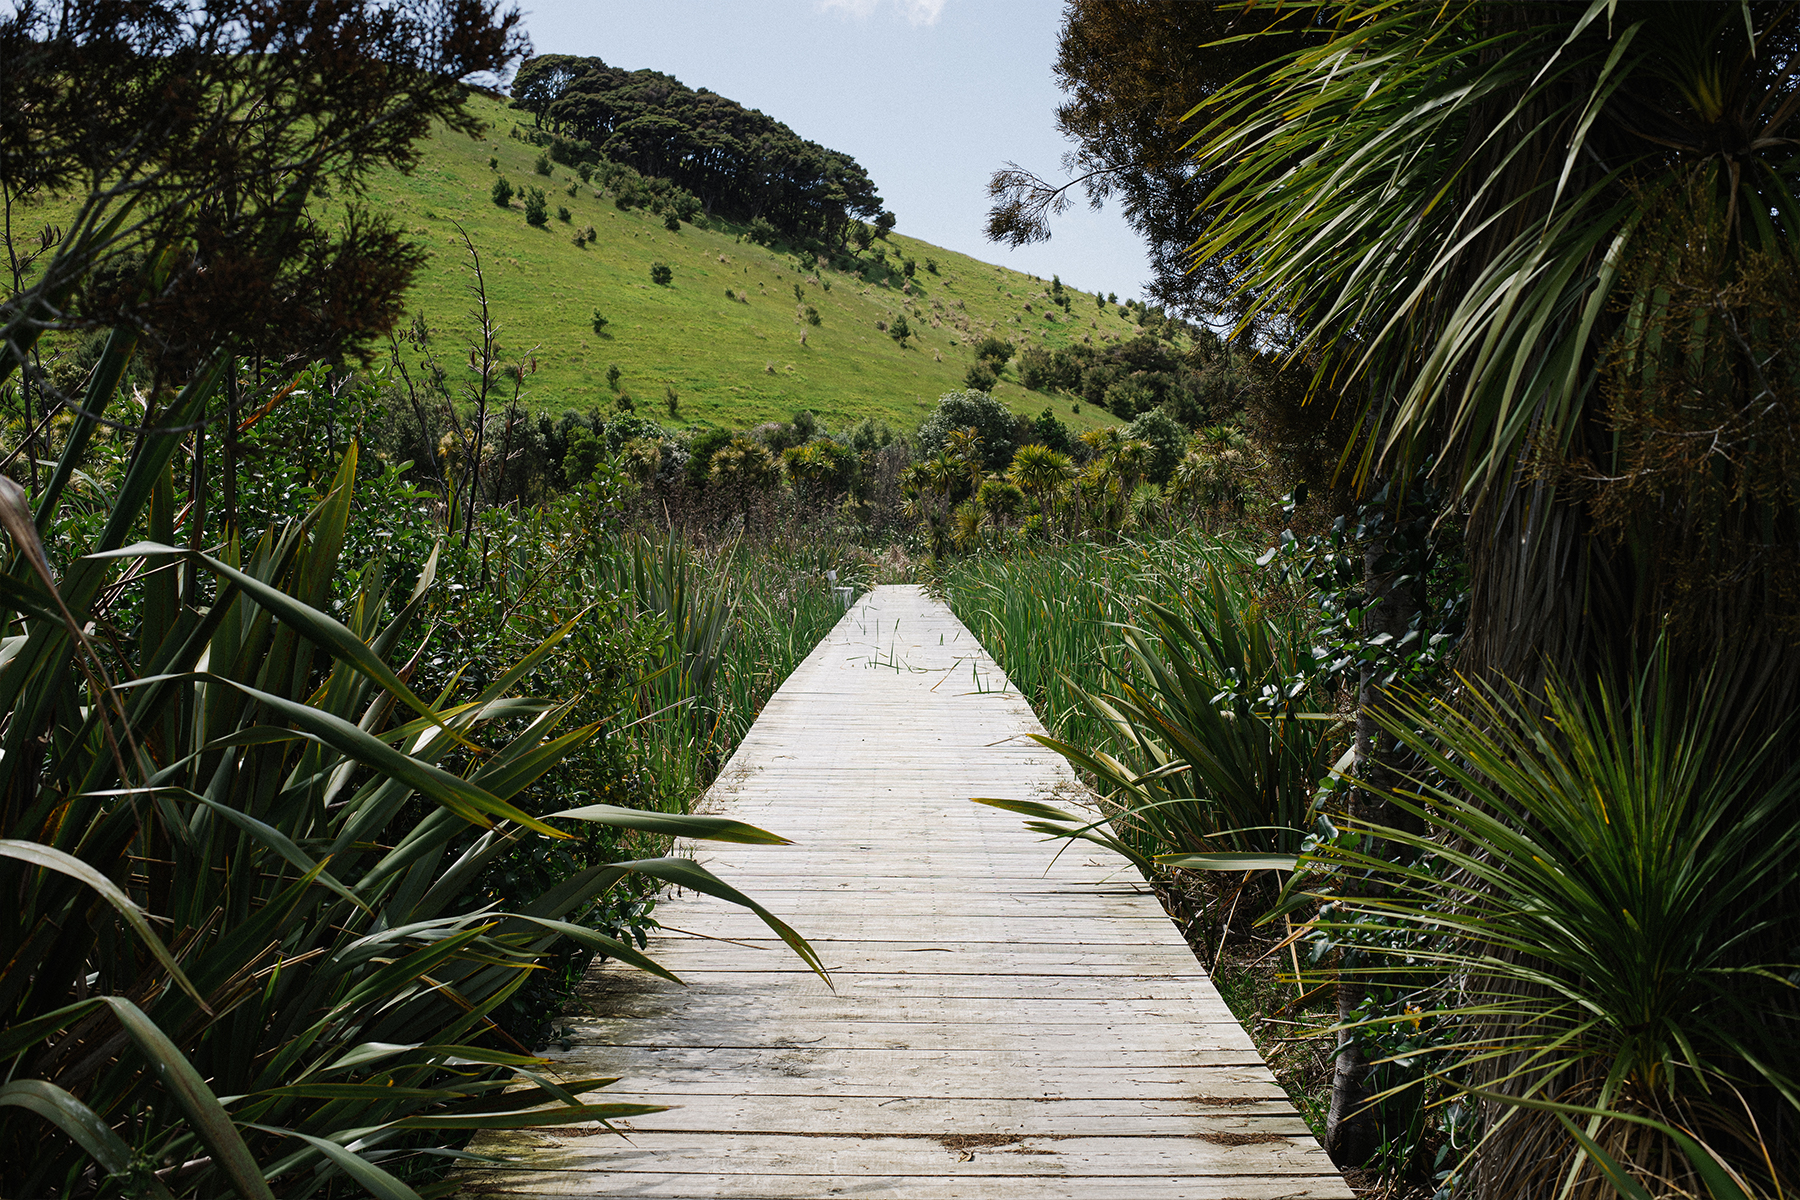 Vineyard Villa boardwalk across wetlands with bush and hills